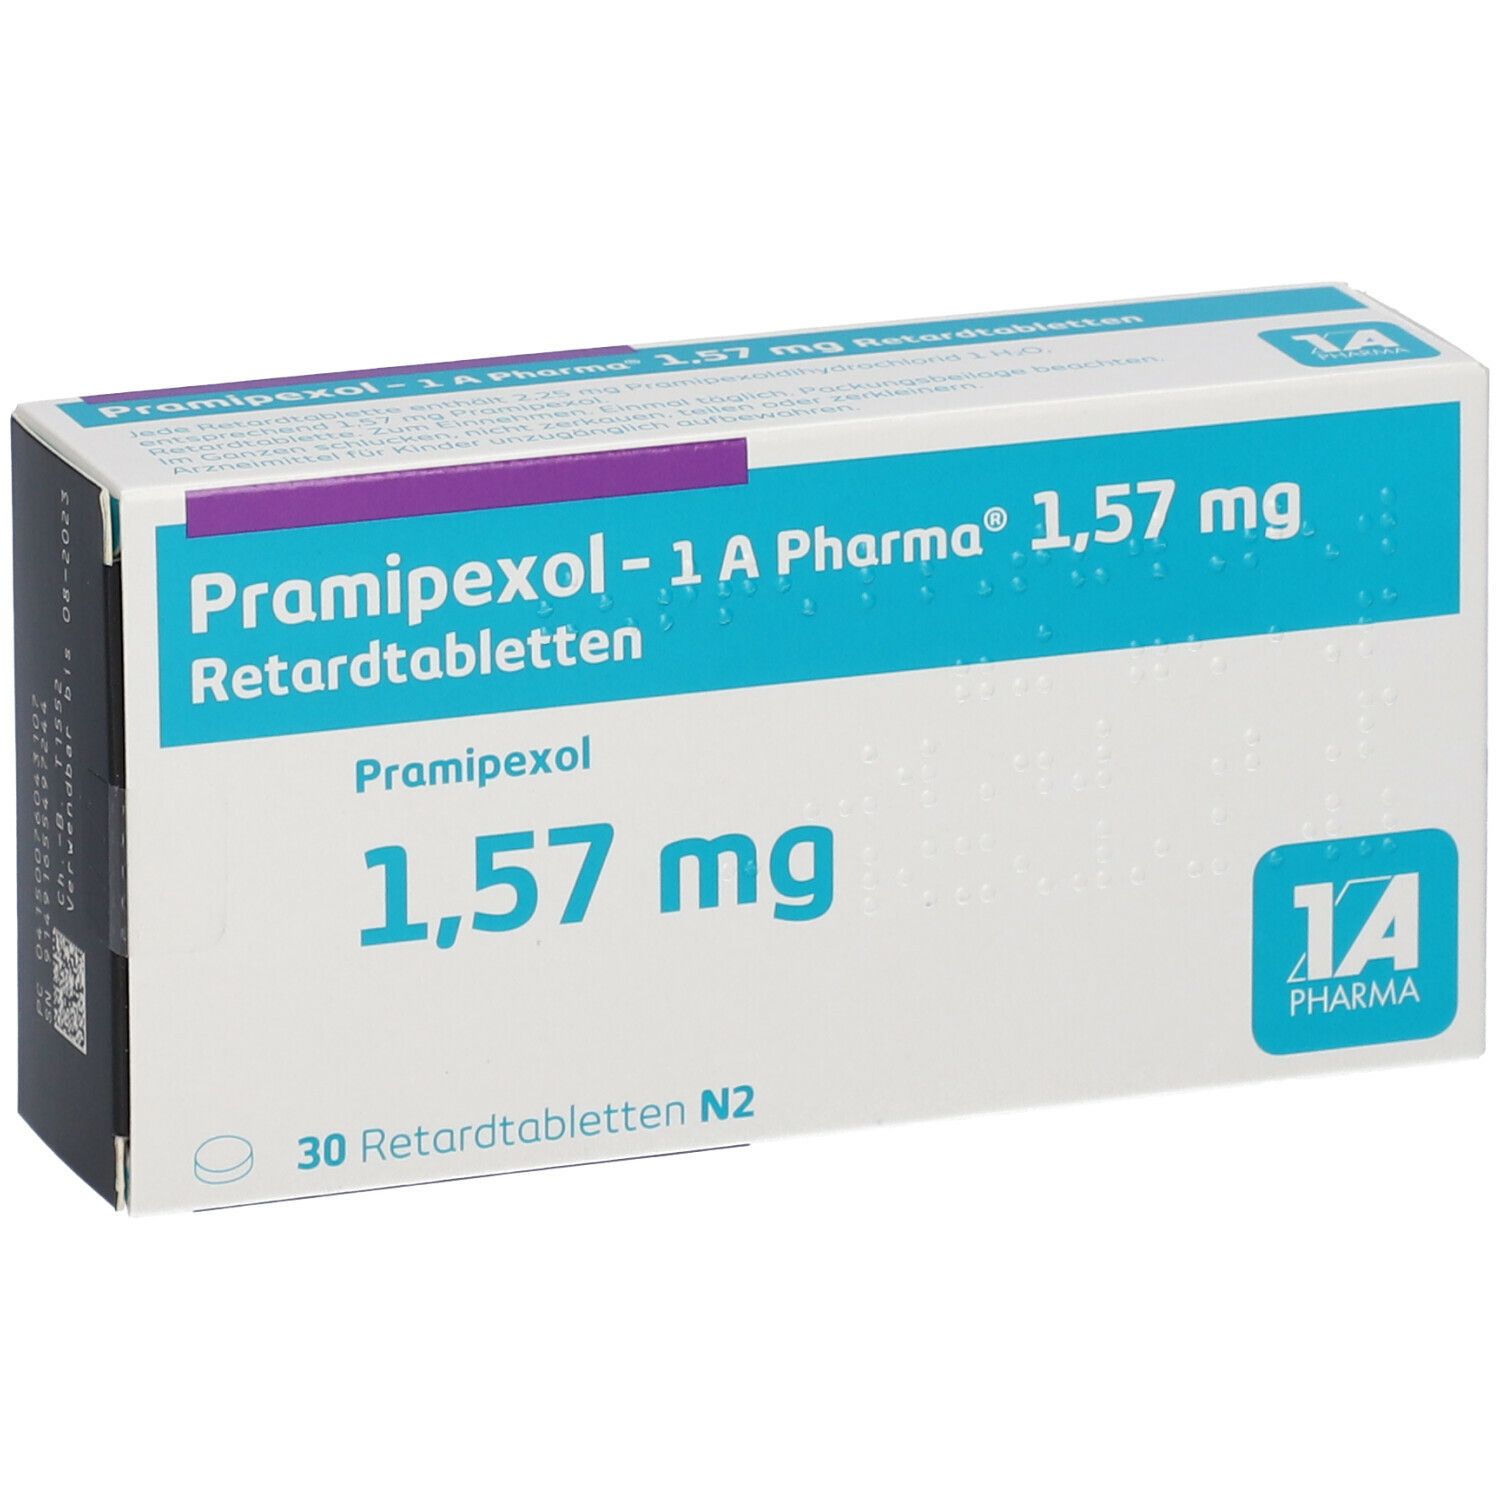 Pramipexol 1A Pharma®1.57Mg